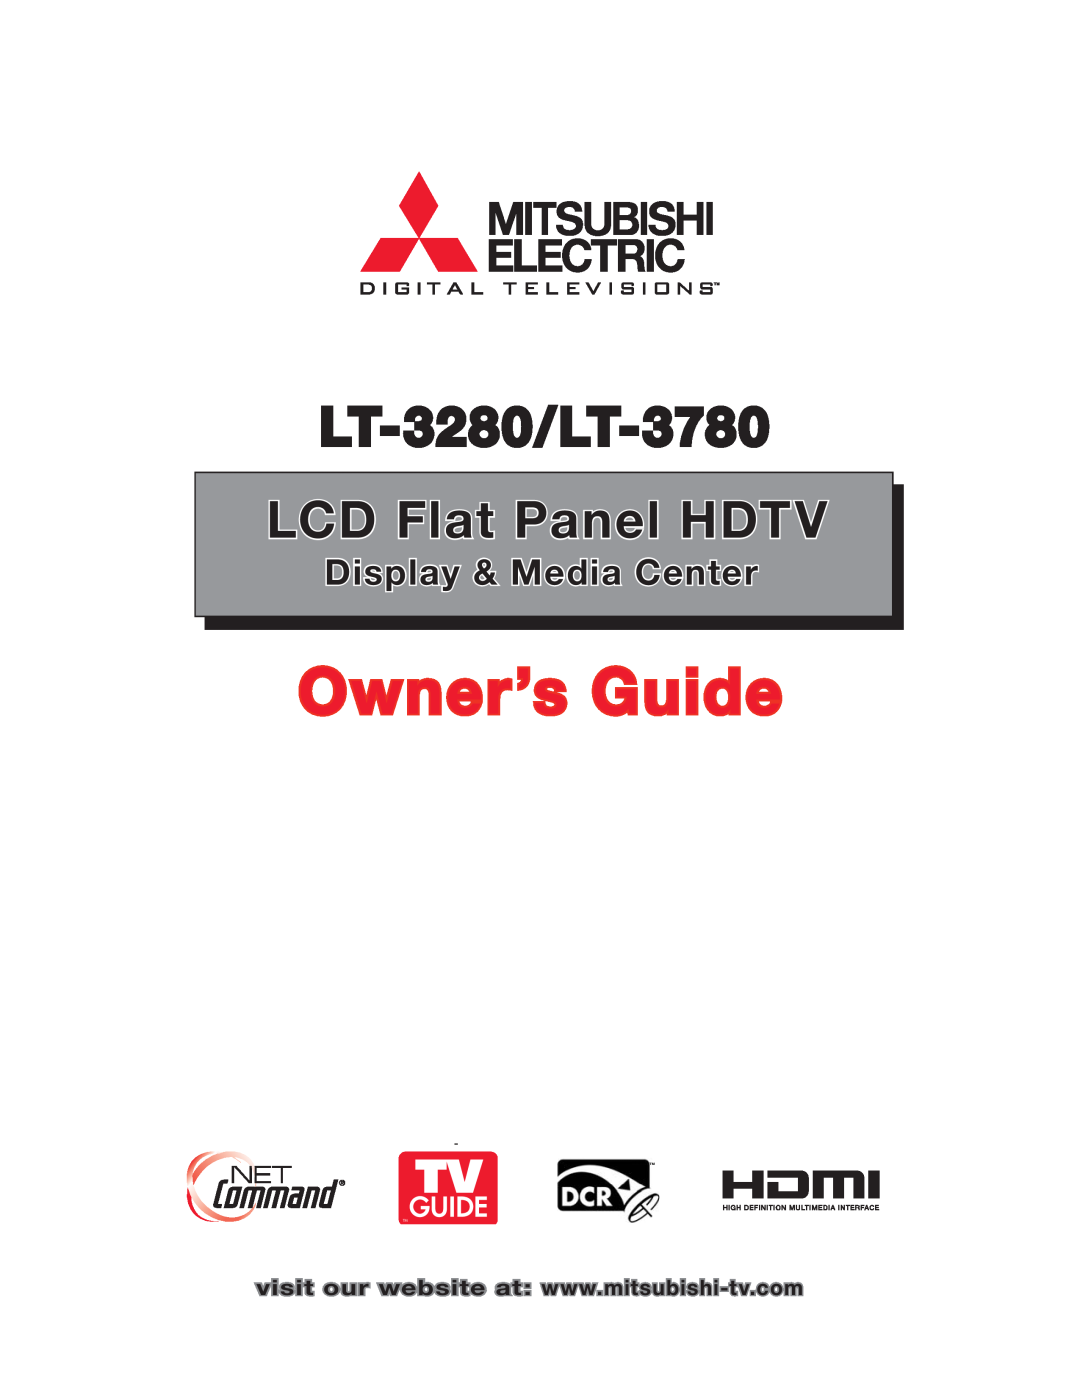 Mitsubishi Electronics manual Display & Media Center, Owner’s Guide, LT-3280/LT-3780, LCD Flat Panel HDTV 